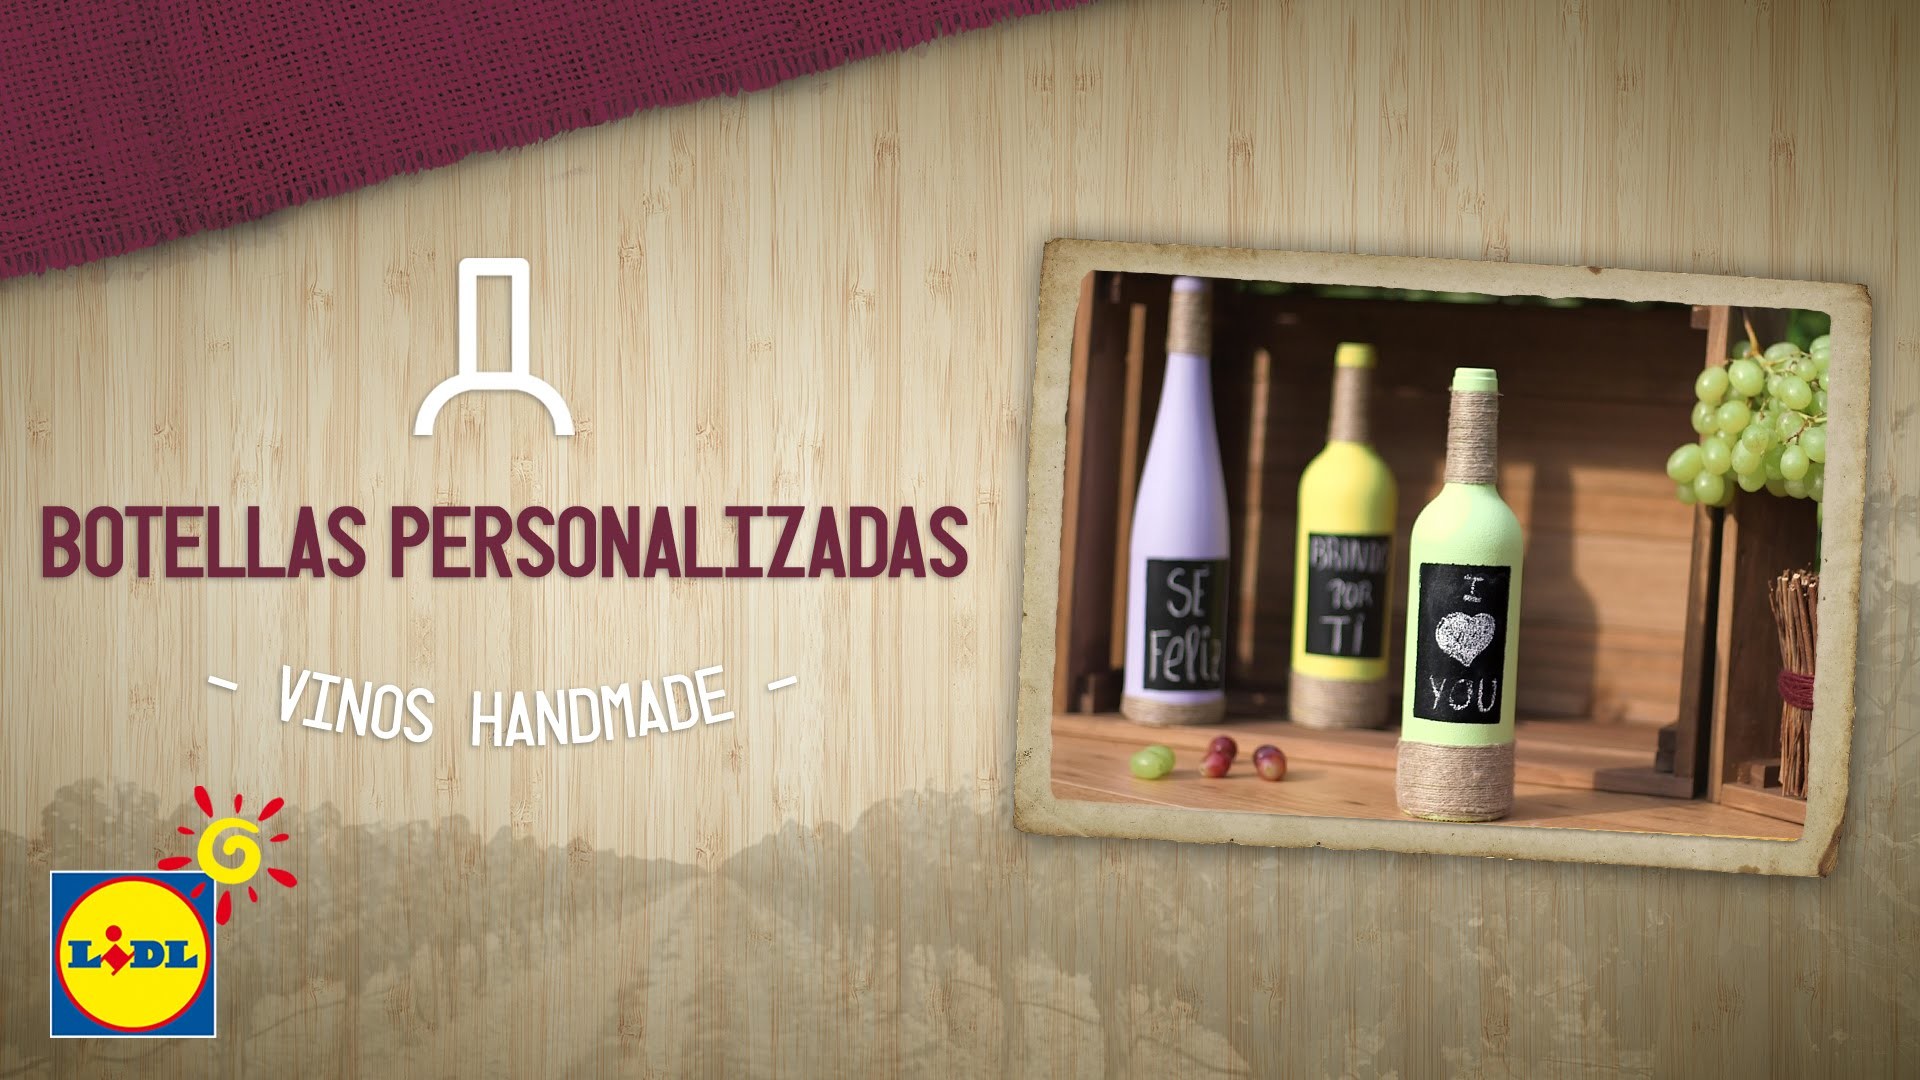 Botella Personalizada - Handmade Vinos